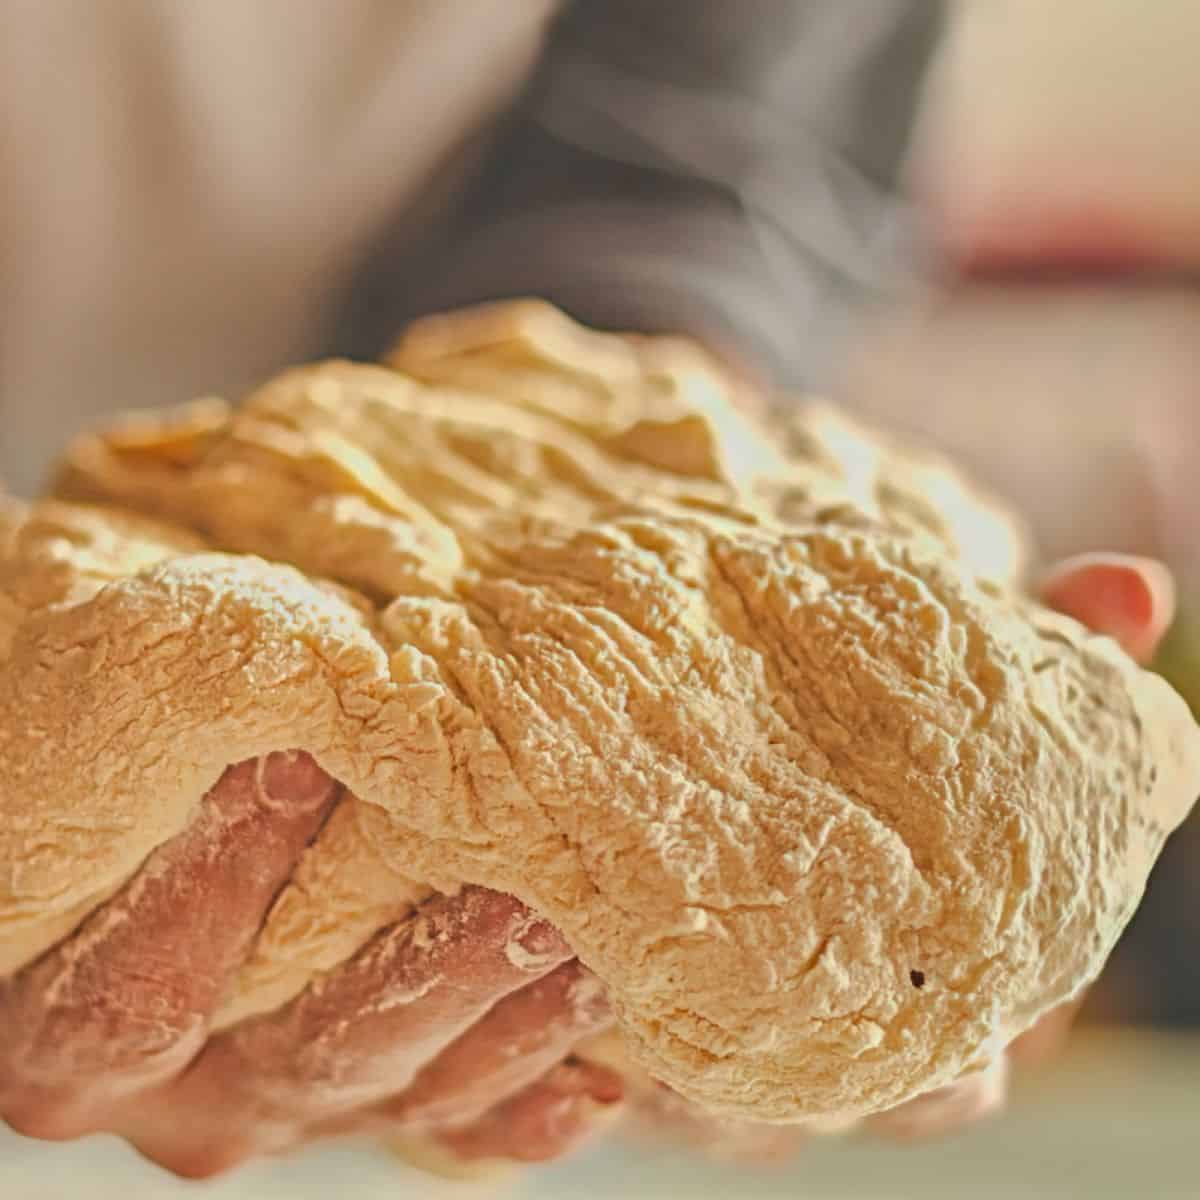 14. Yeast-free Bread